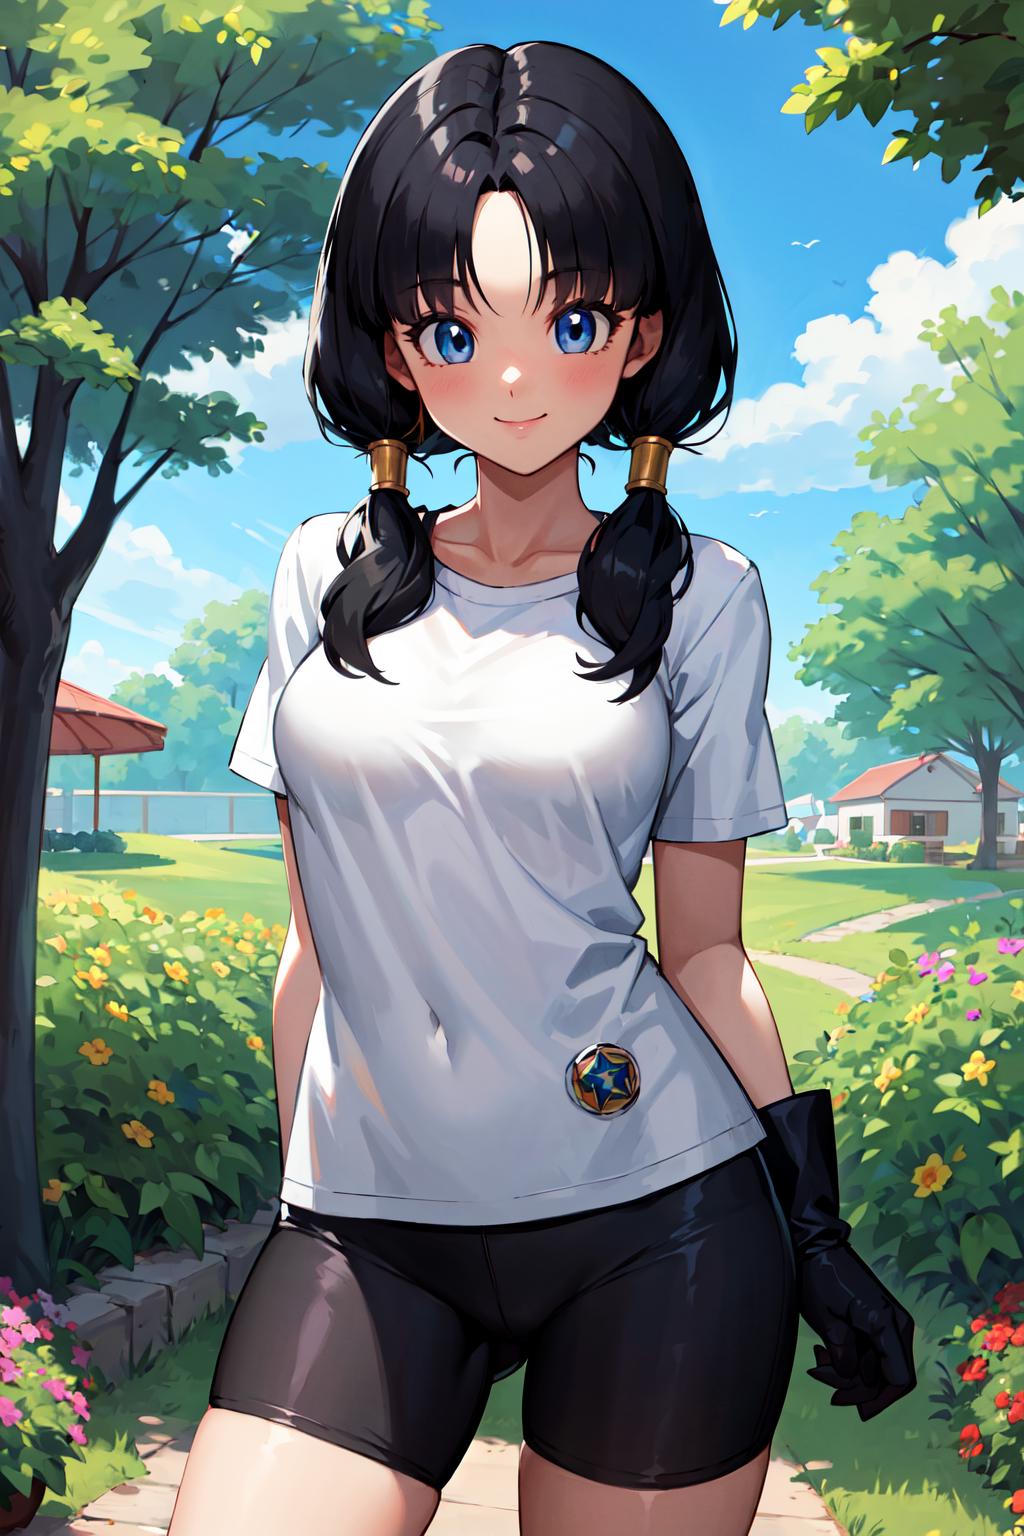 A cute cartoon girl with black hair wearing a white shirt and black pants.